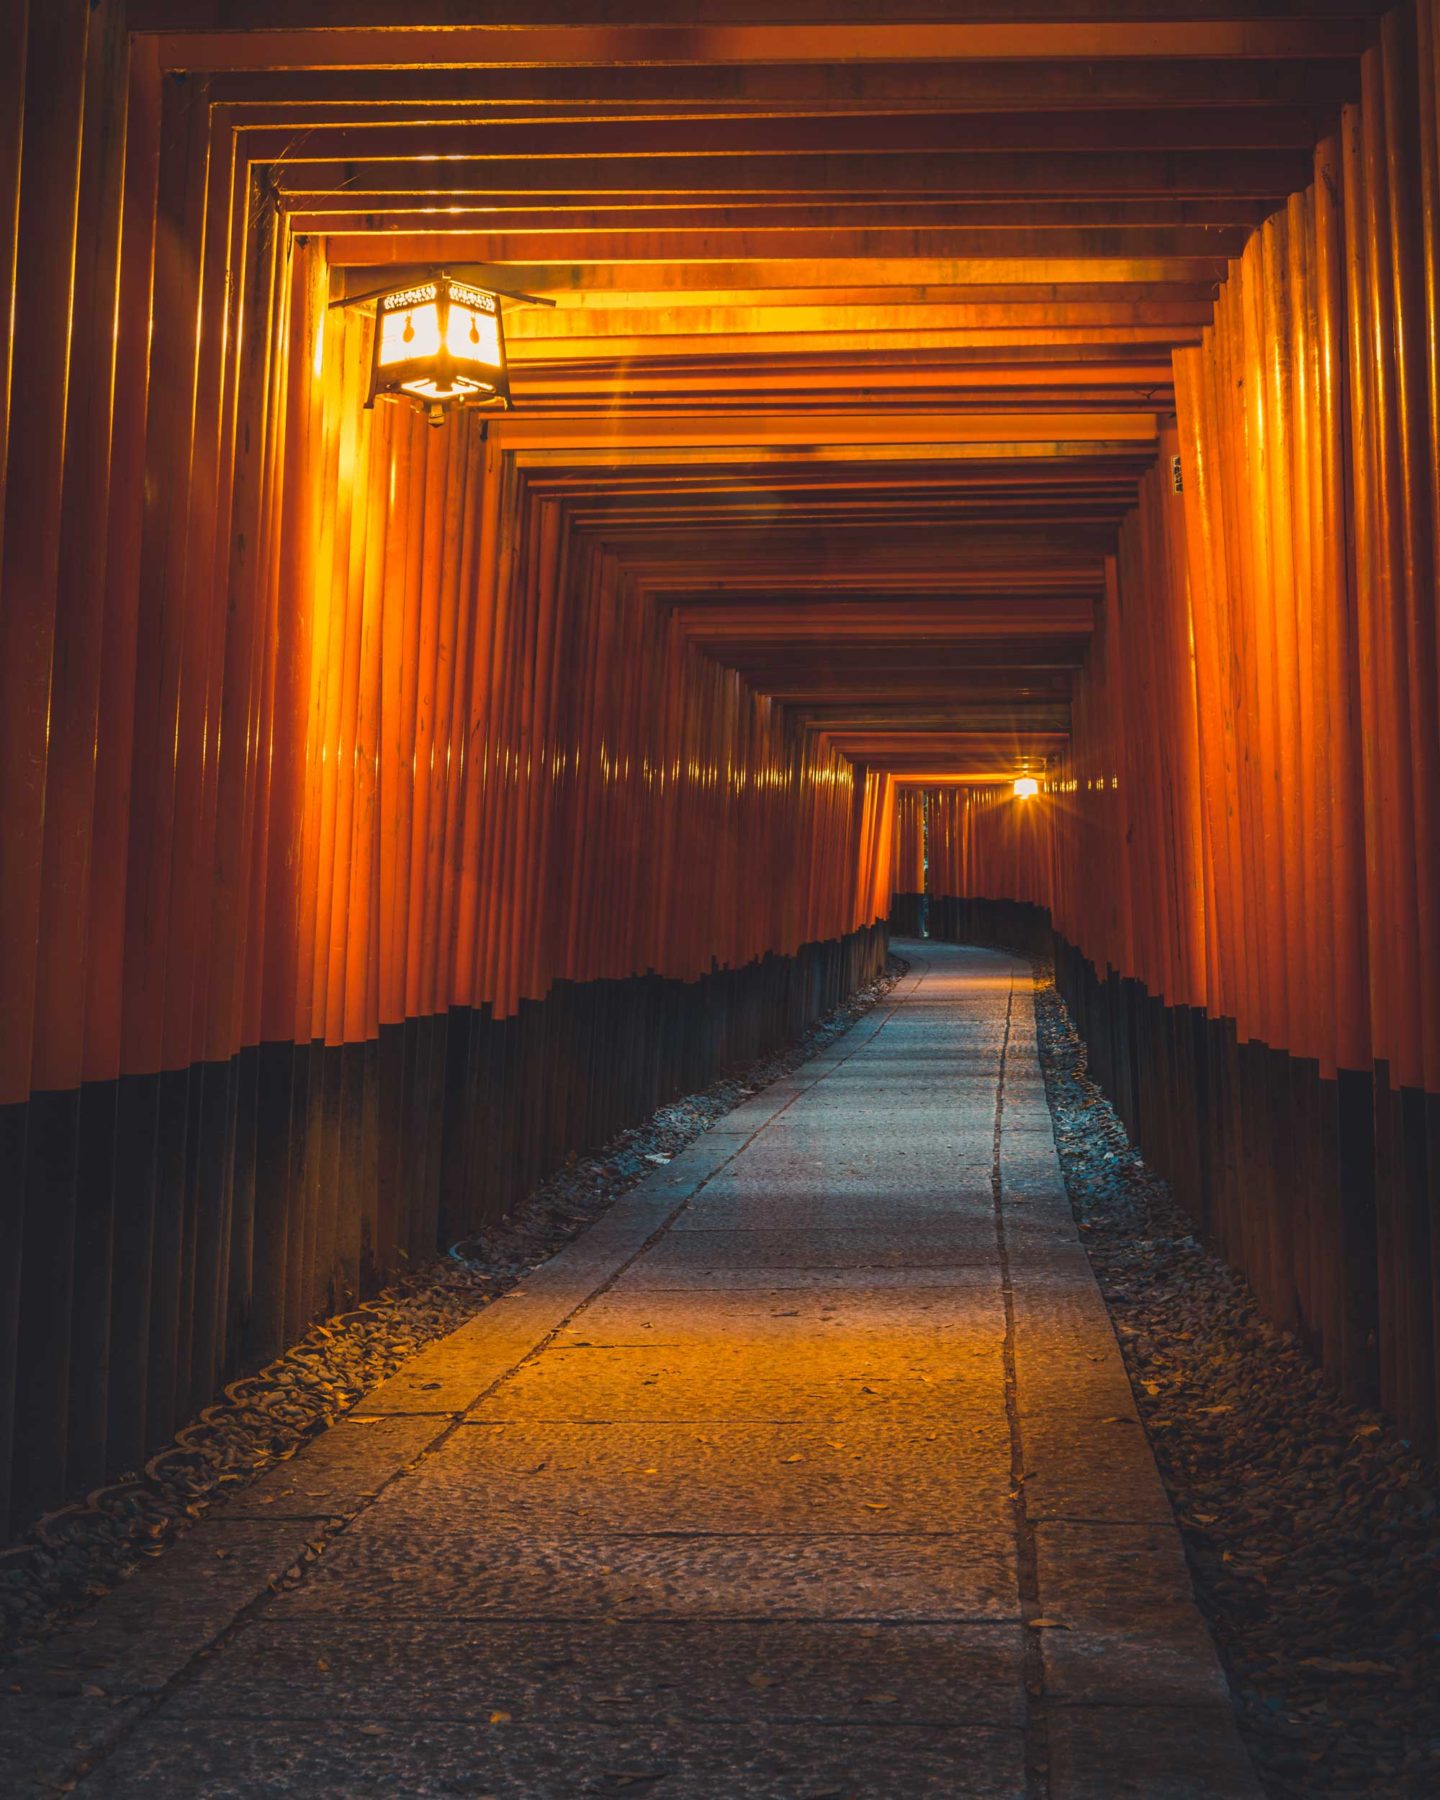 A pathway under orange, close-set torii gates, Japan